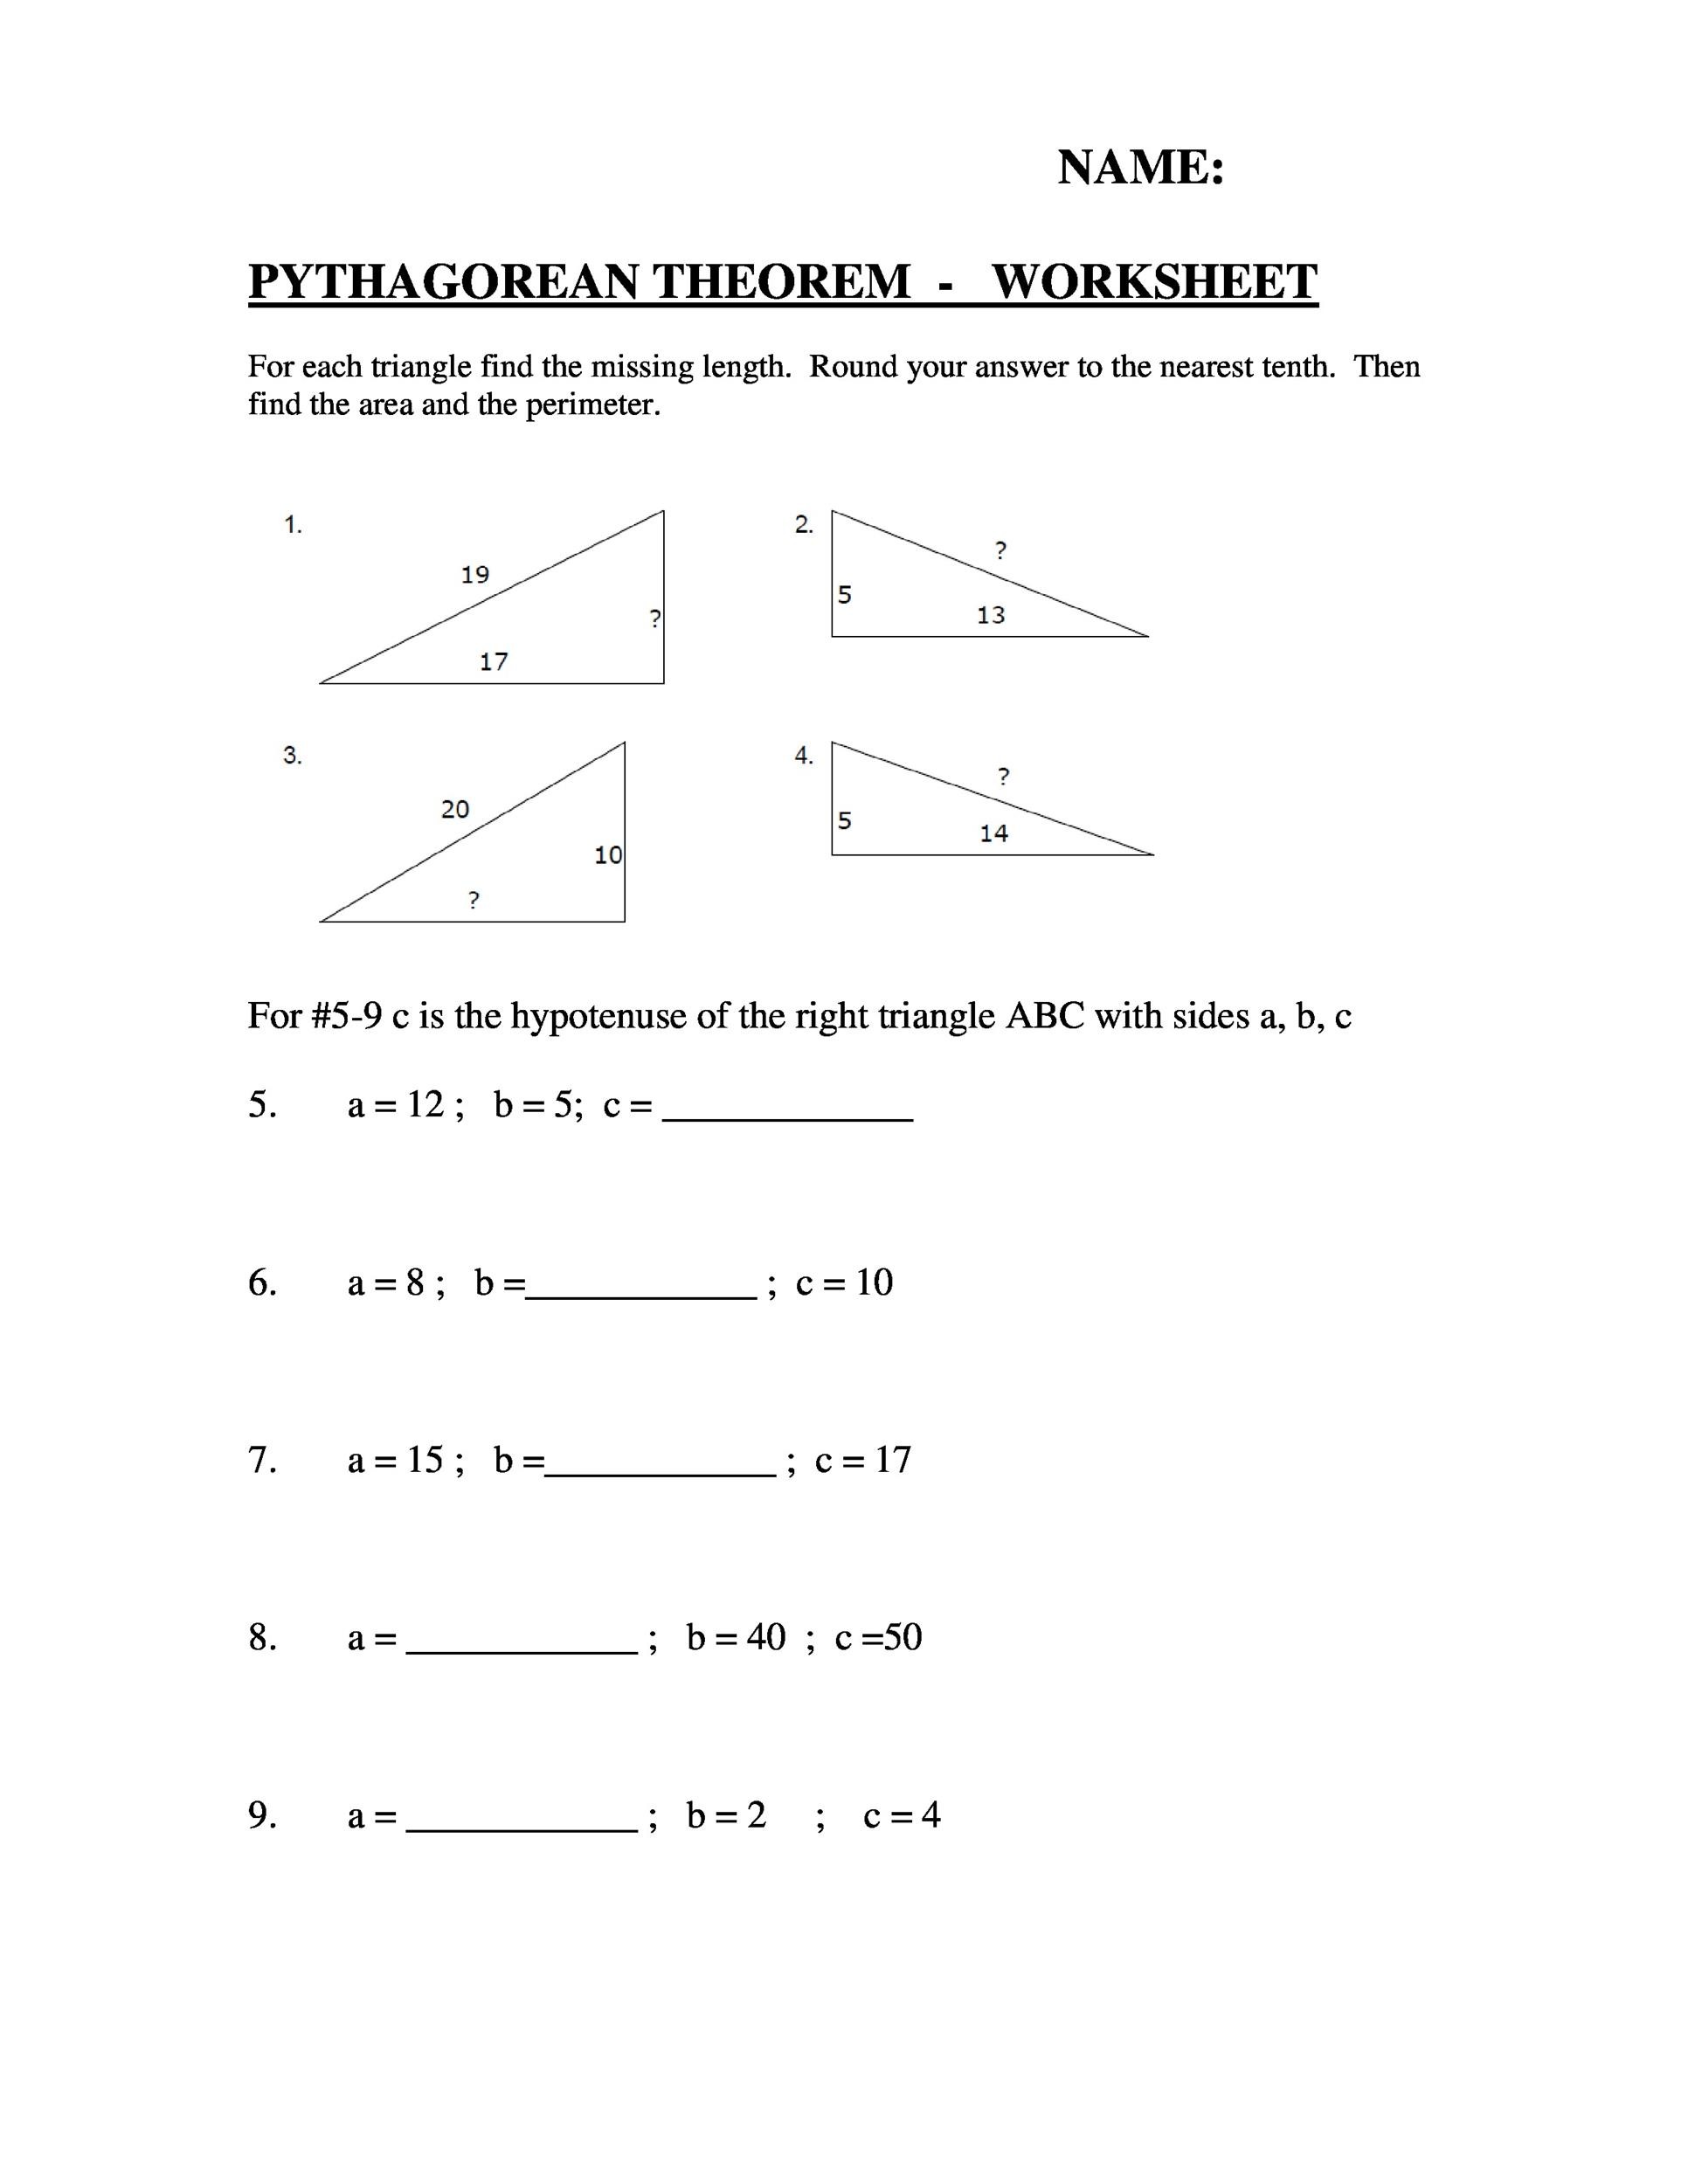 Pythagoras Theorem Worksheets Pdf download